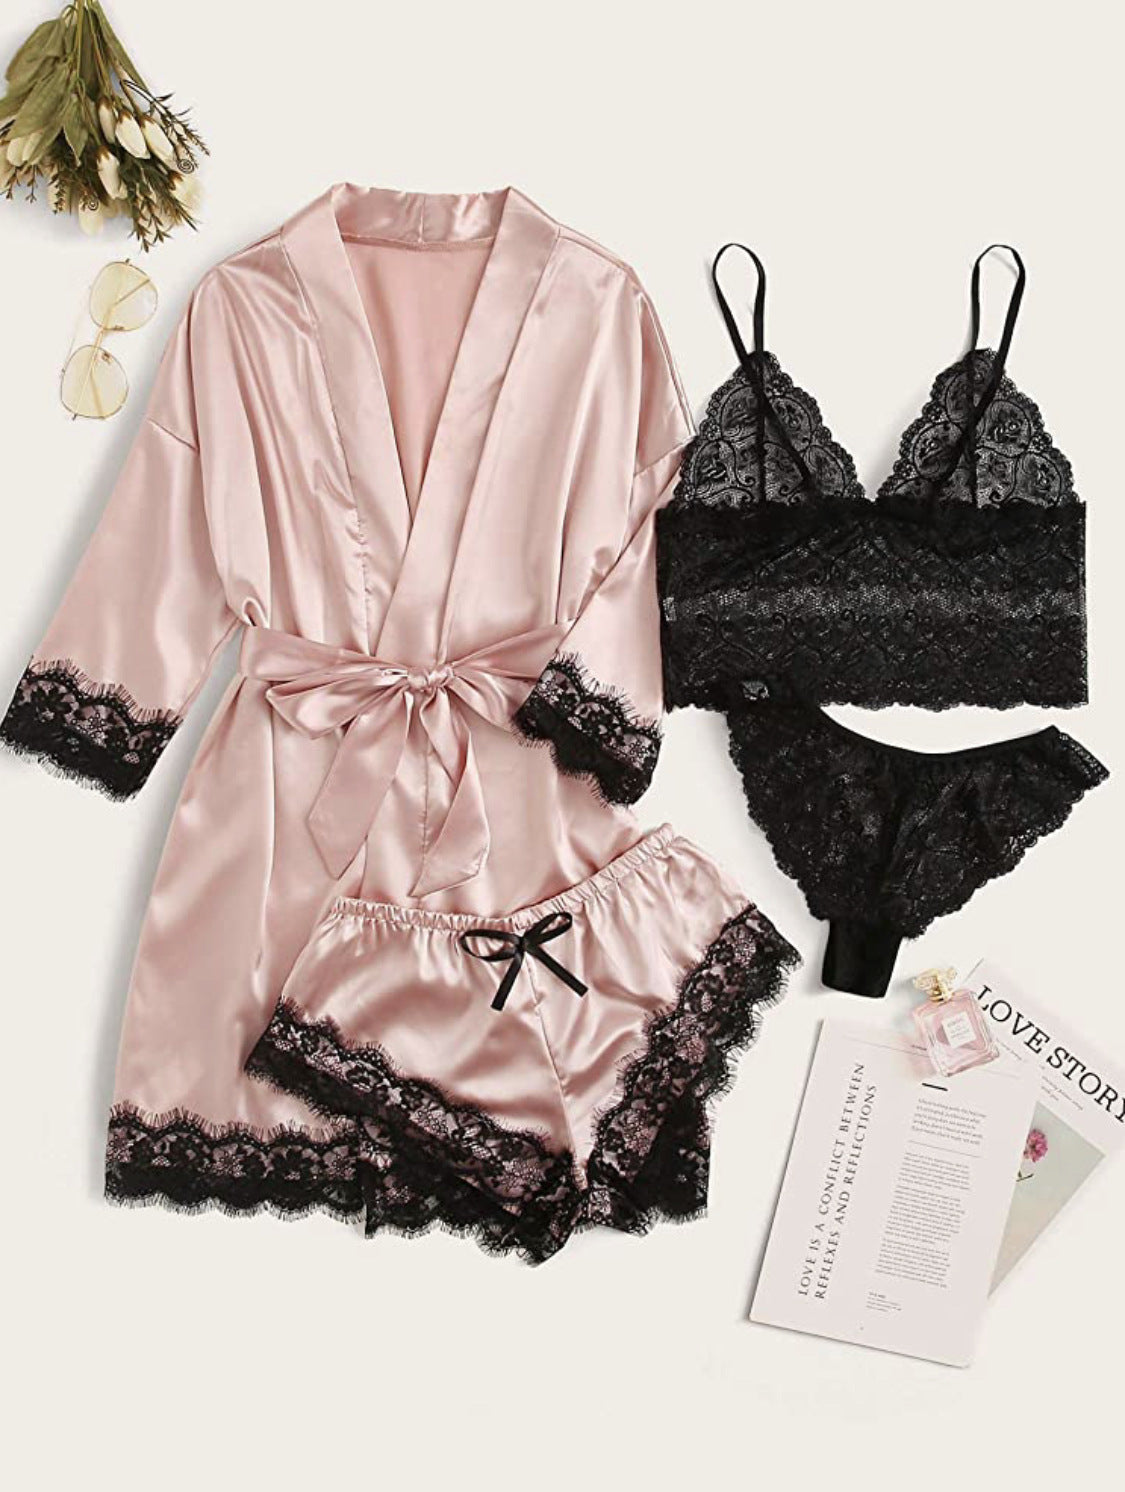 Ladies Pink Satin Sling Pajamas Robe Lace Exotic Lingerie 4-Piece Set AL-641765901564